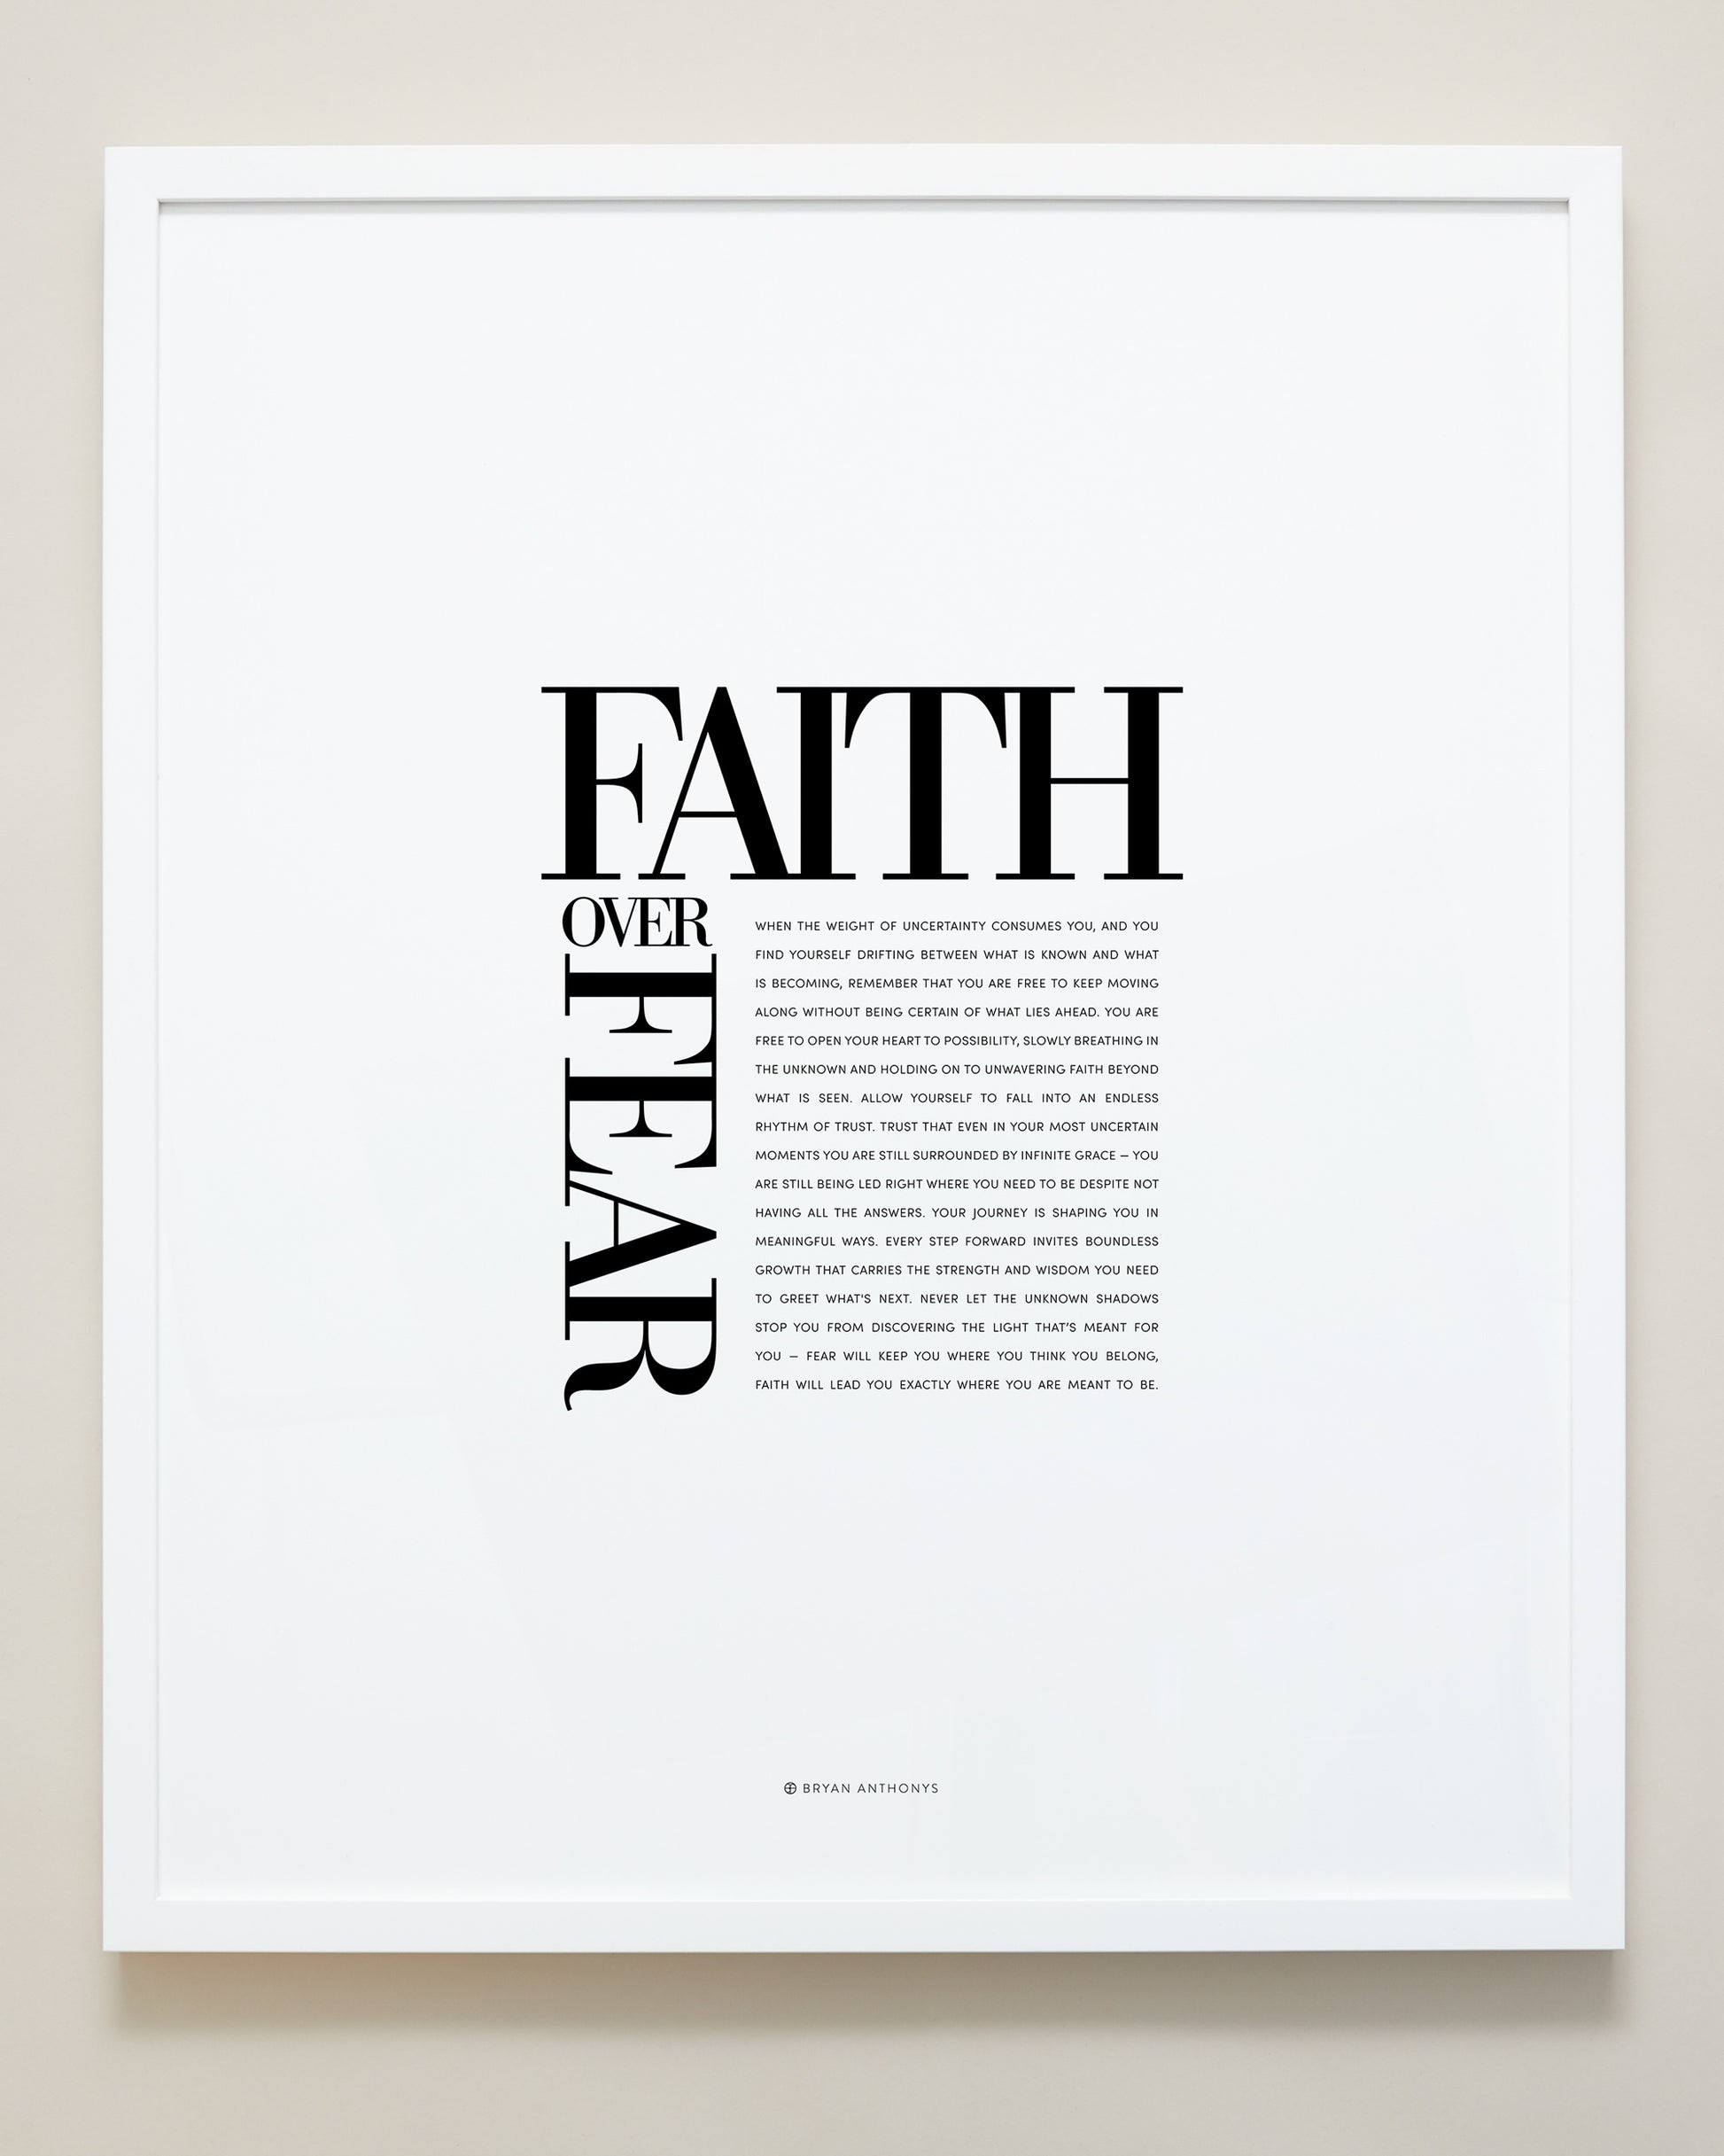 Bryan Anthonys Home Decor Purposeful Prints Faith Over Fear Editorial Framed Print White 20x24